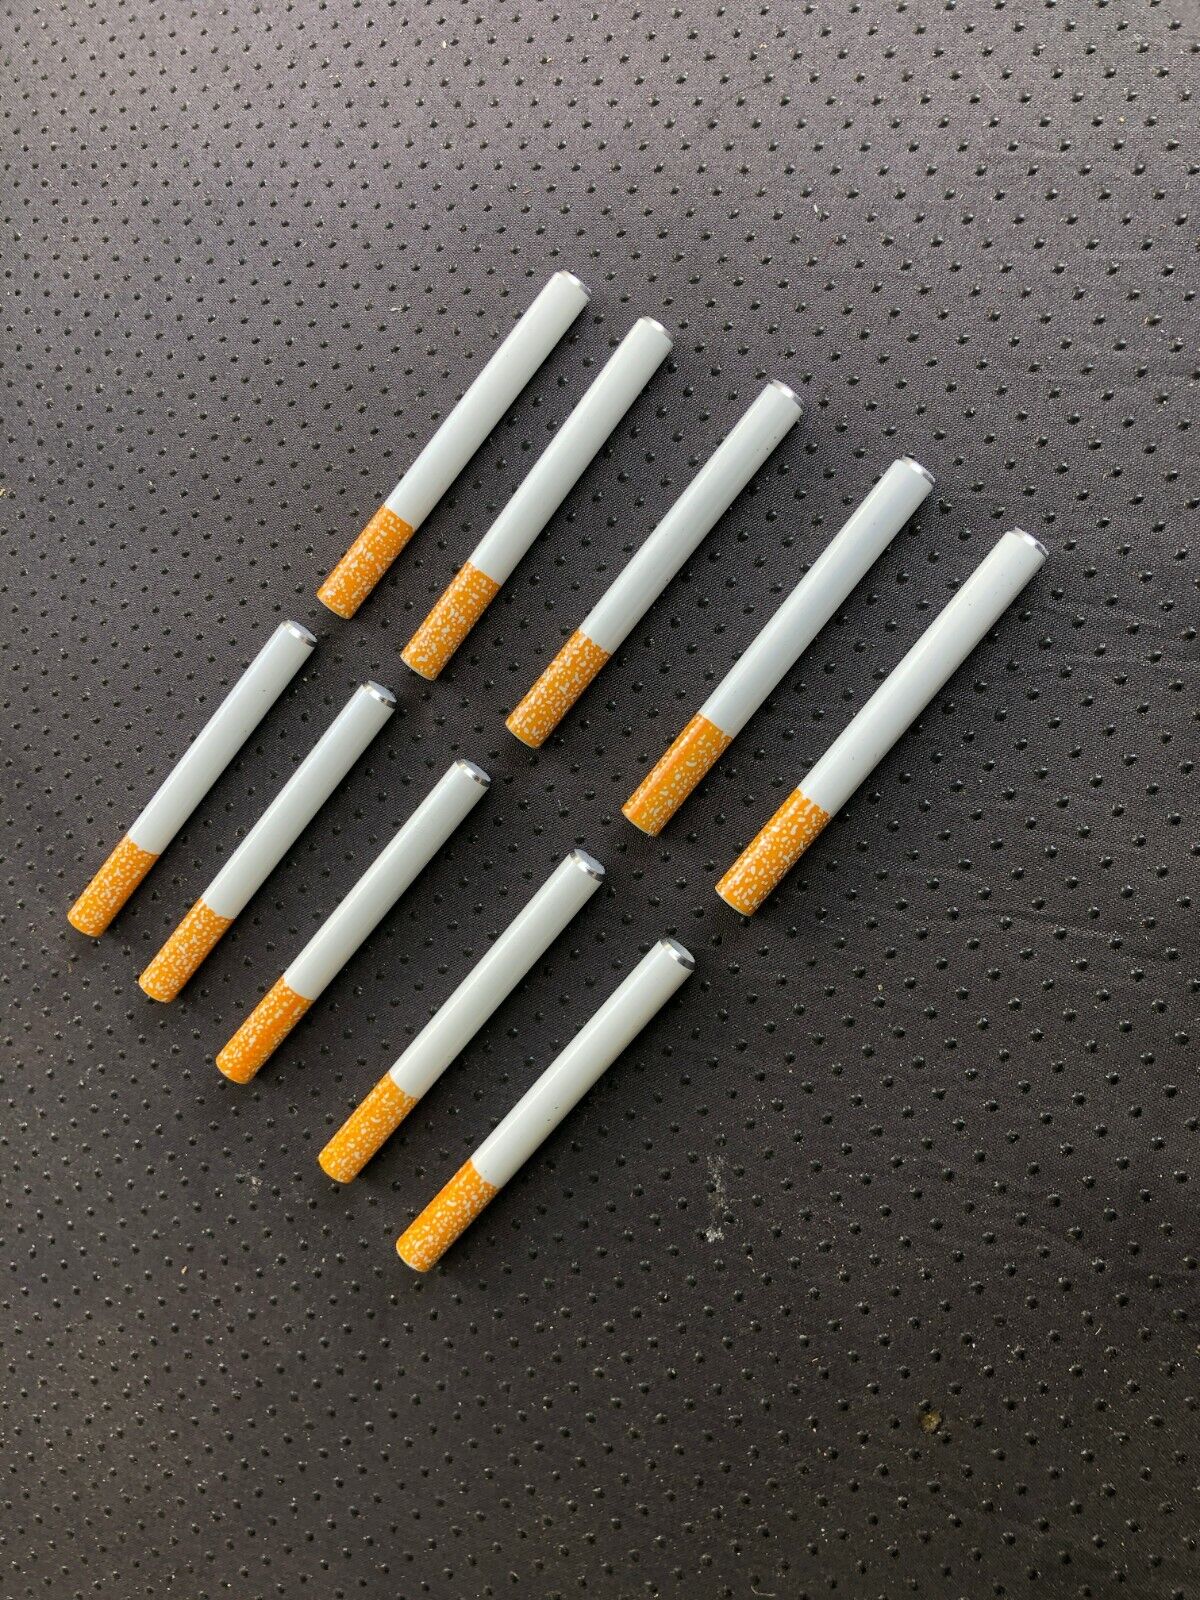 10x one hitter bat cigarette (3 inches) Ceramic US SELLER SAME DAY SHIP